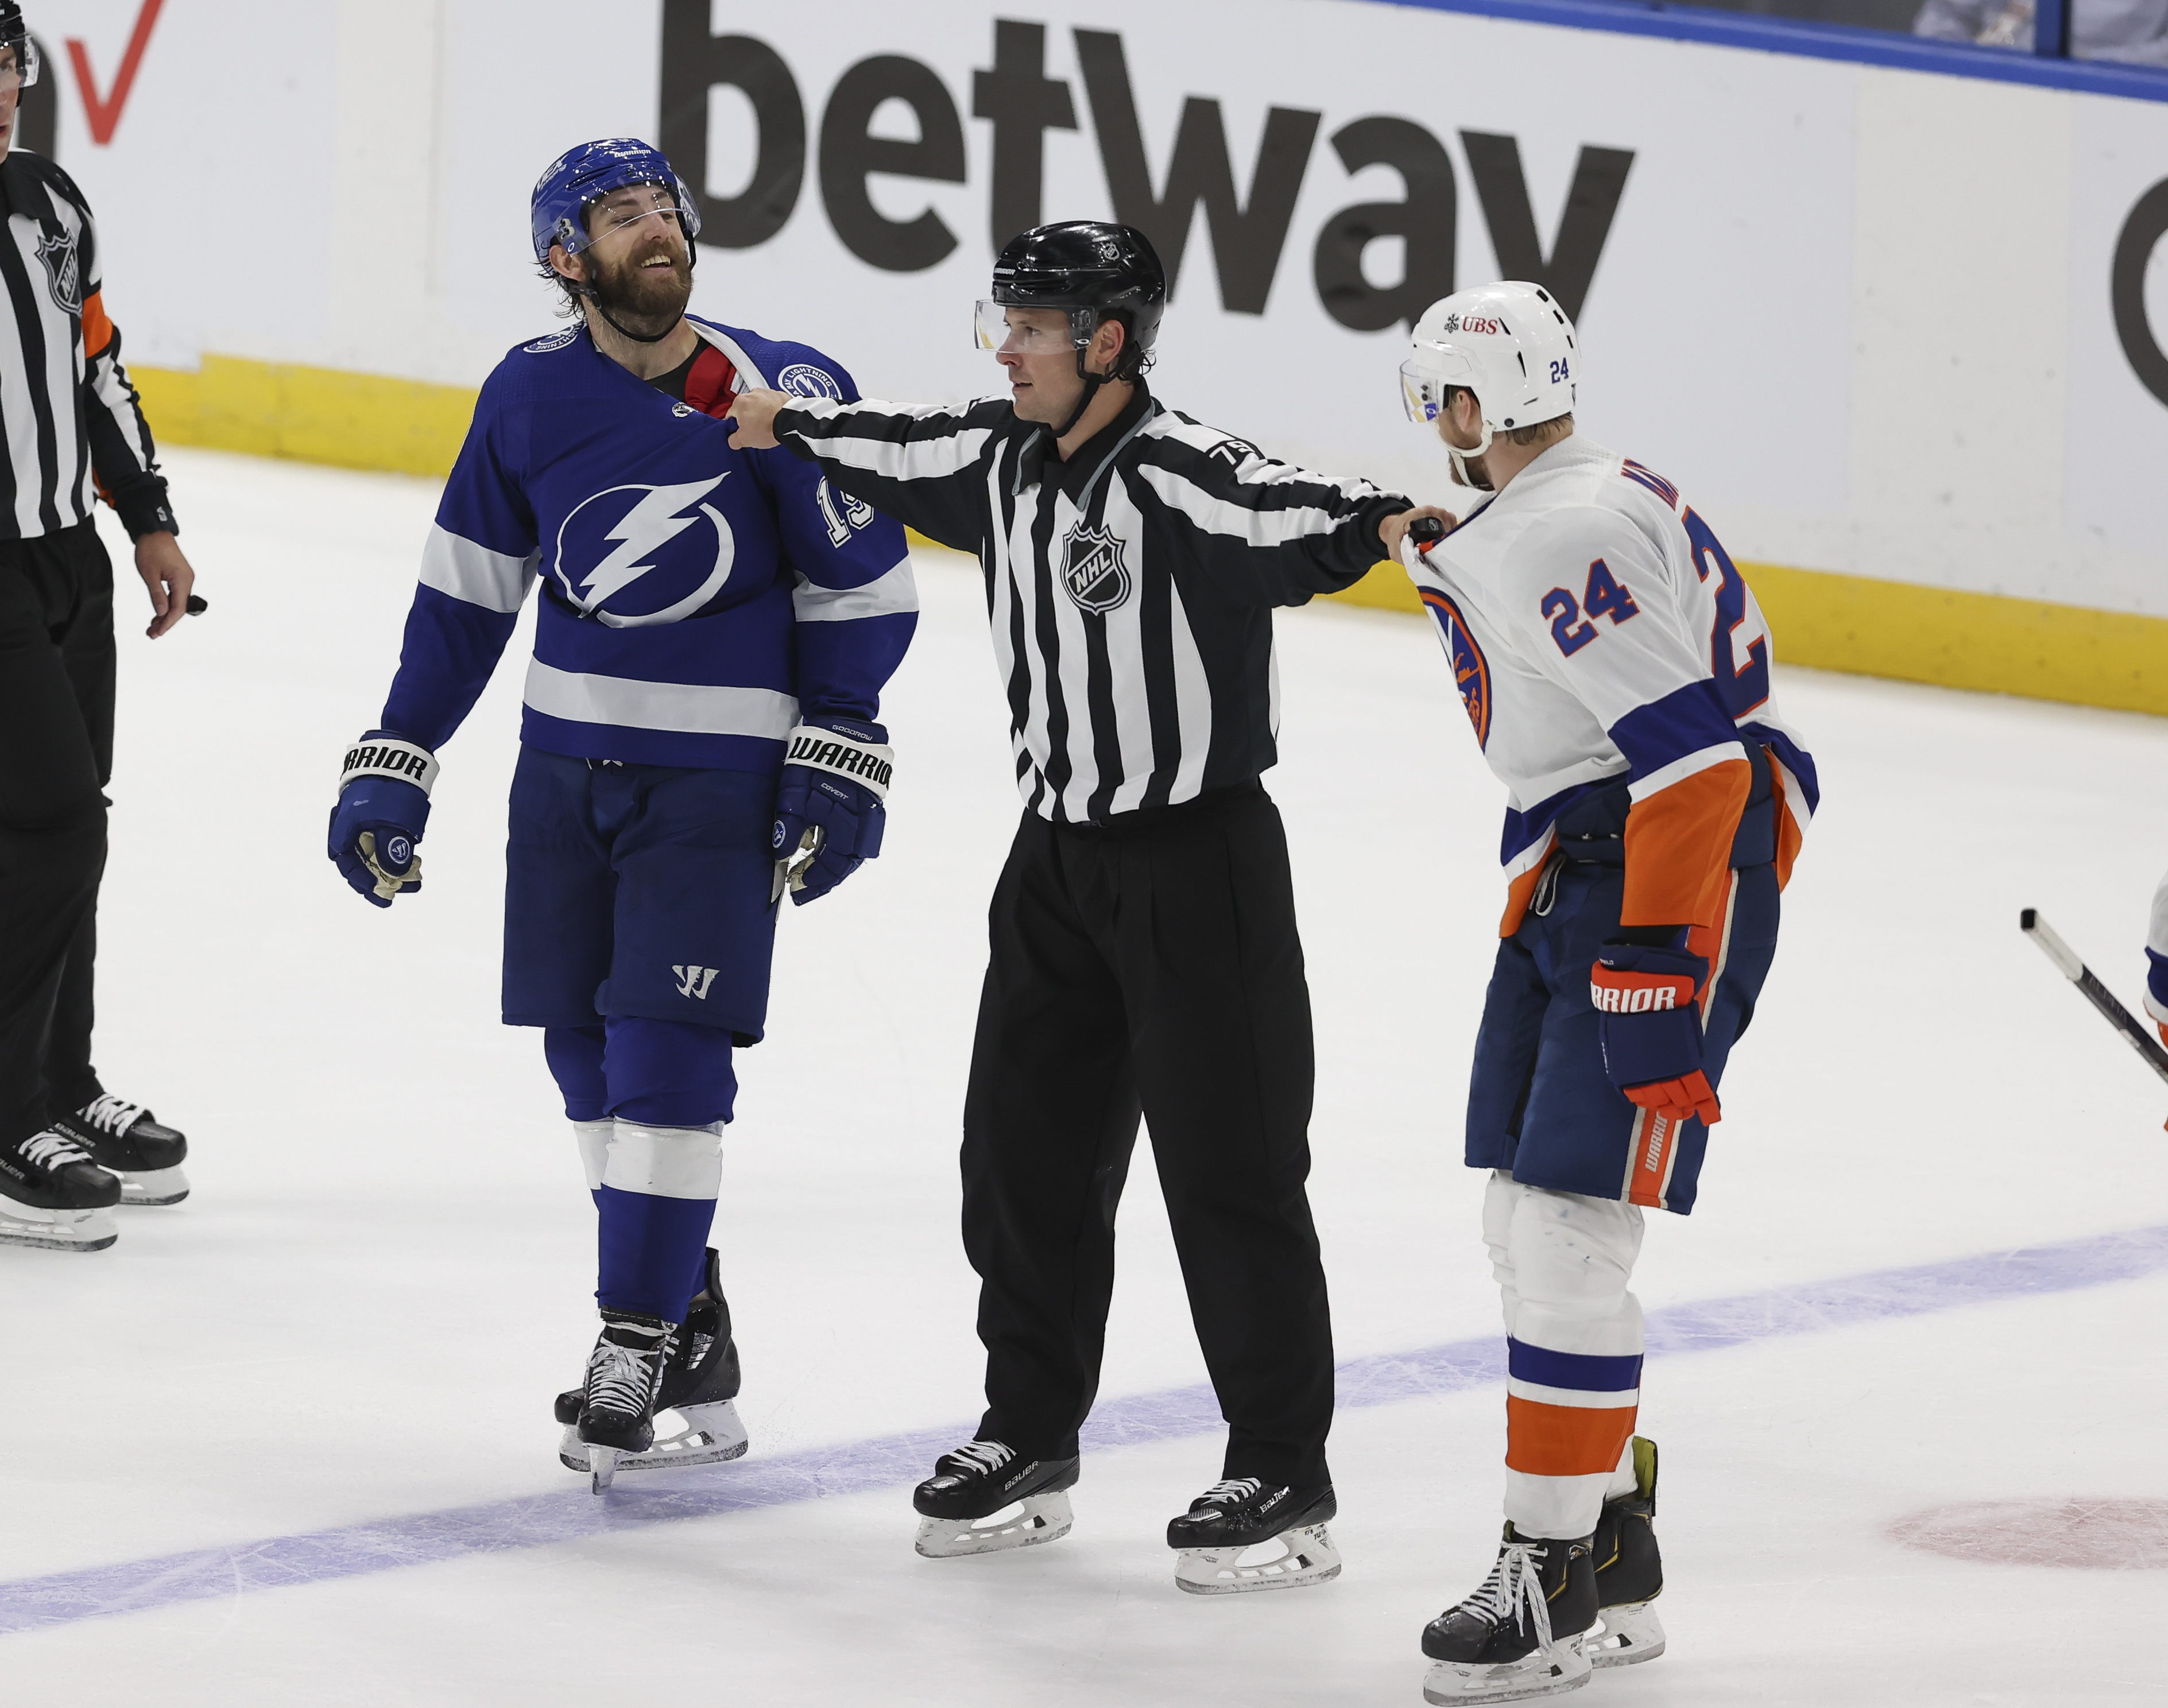 NHL: JUN 21 Stanley Cup Playoffs Semifinals - Islanders at Lightning